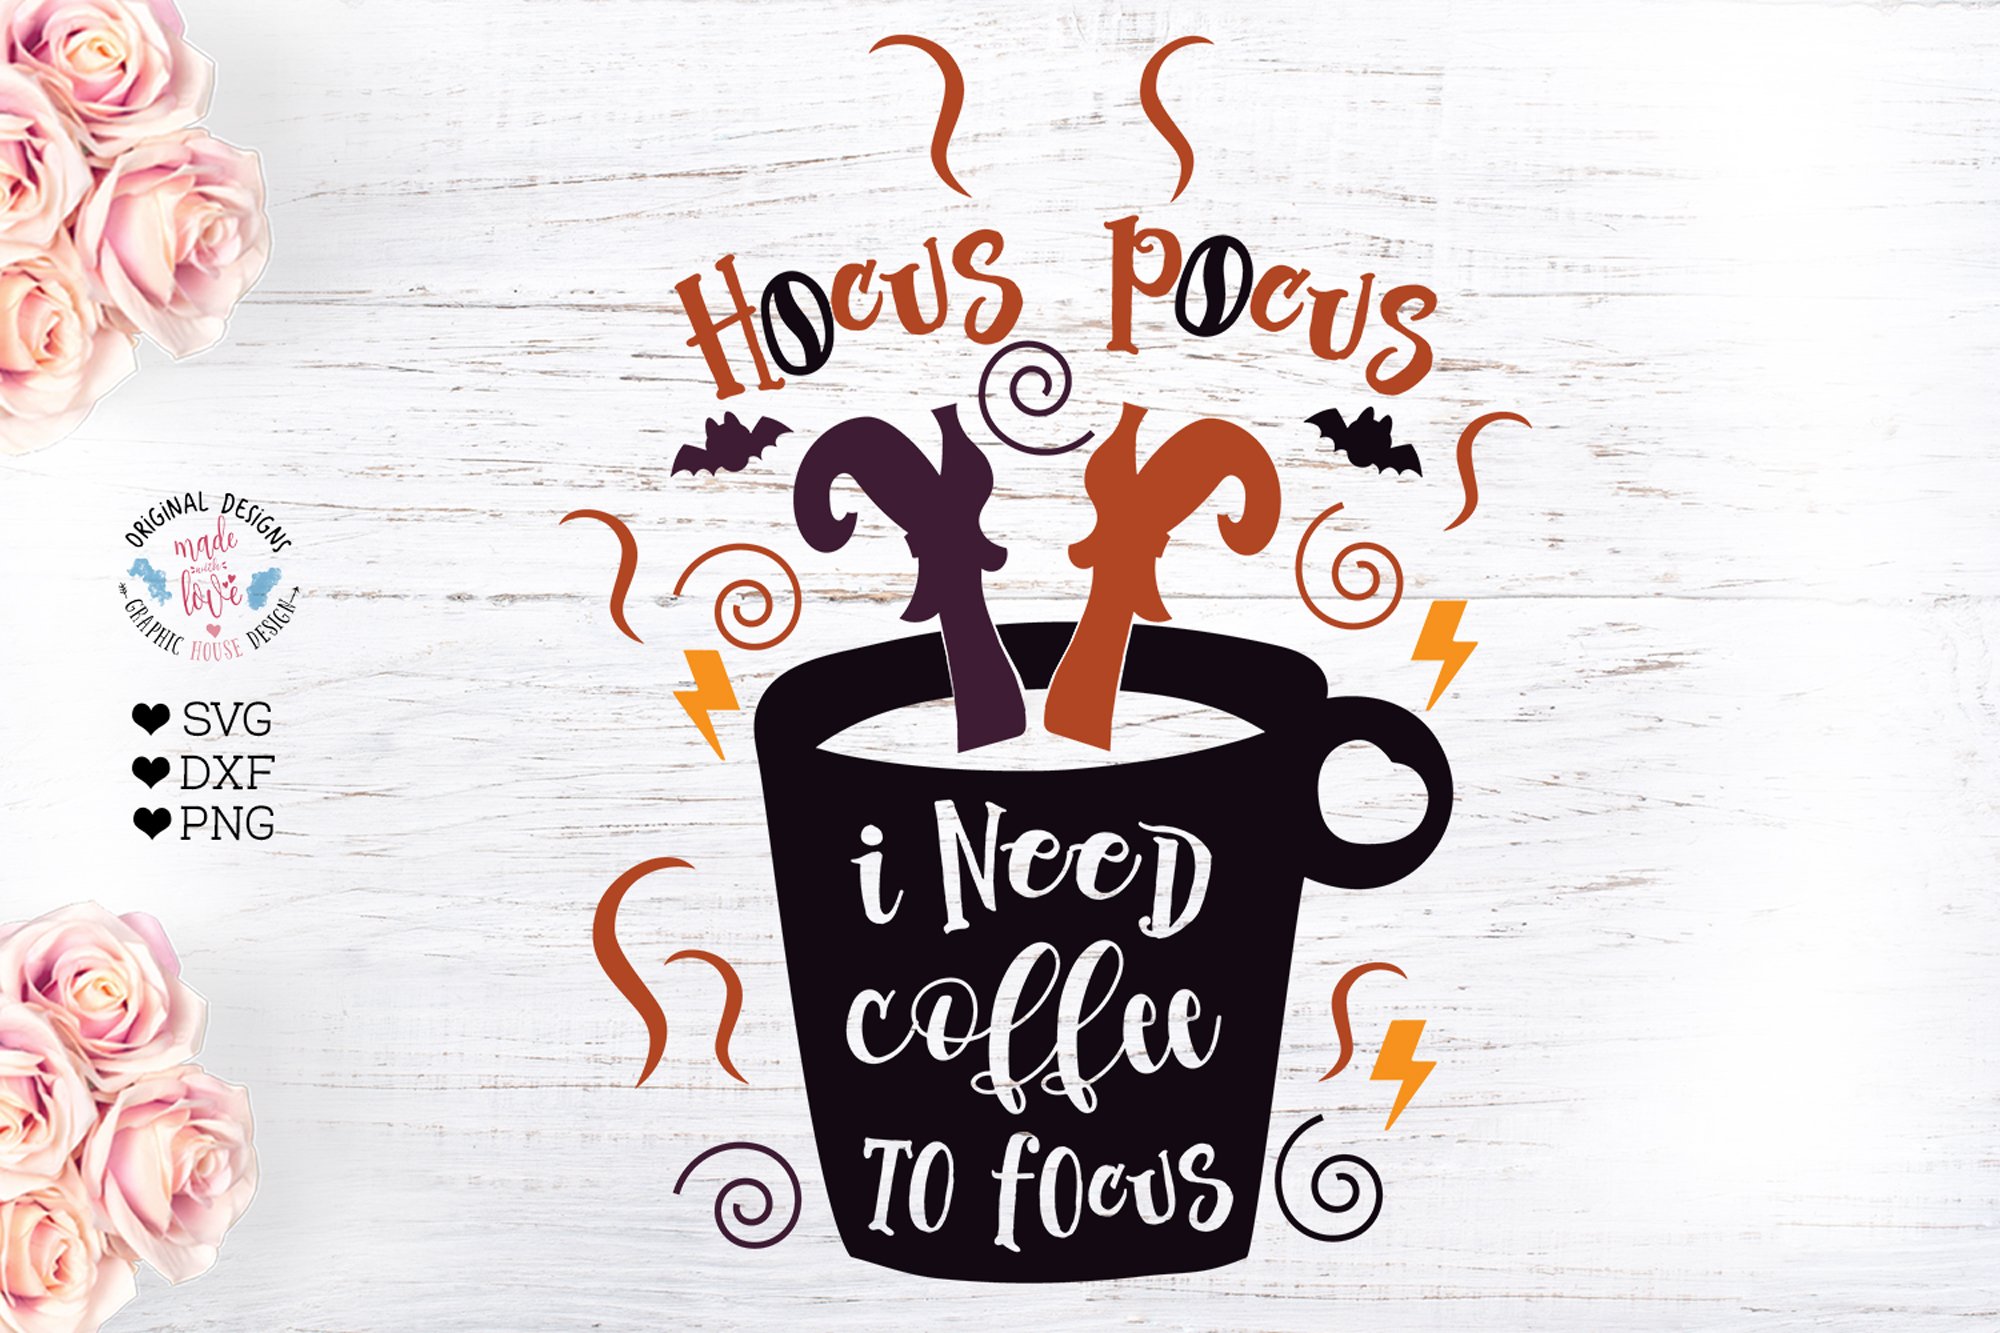 Hocus Pocus I Need Coffee to Focus cover image.